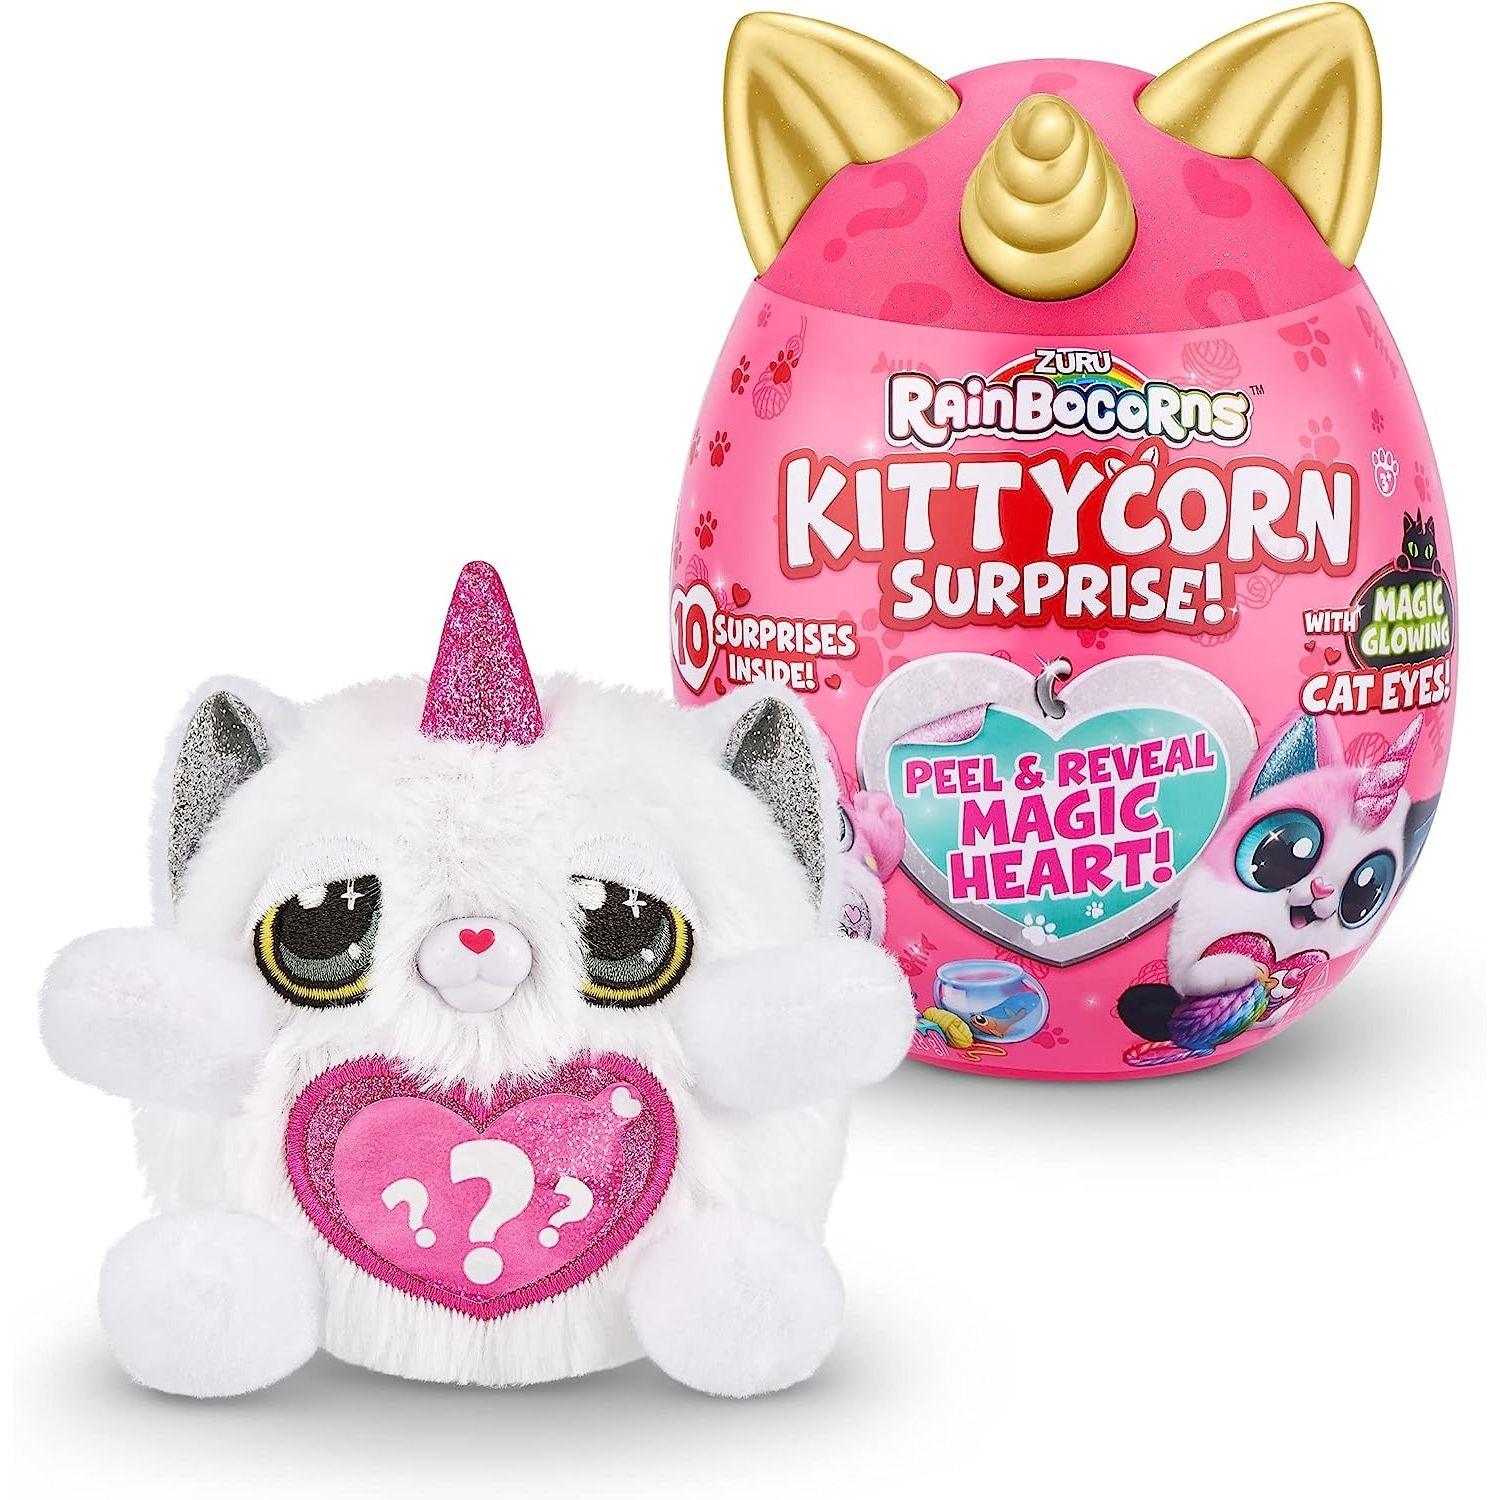 Rainbocorns Kittycorn Surprise Series 1 (Chinchilla Cat) Collectible Plush Stuffed Animal, Surprise Egg, Sticker Pack, Jelly Slime Poop 9259H - BumbleToys - 5-7 Years, Fashion Dolls & Accessories, Girls